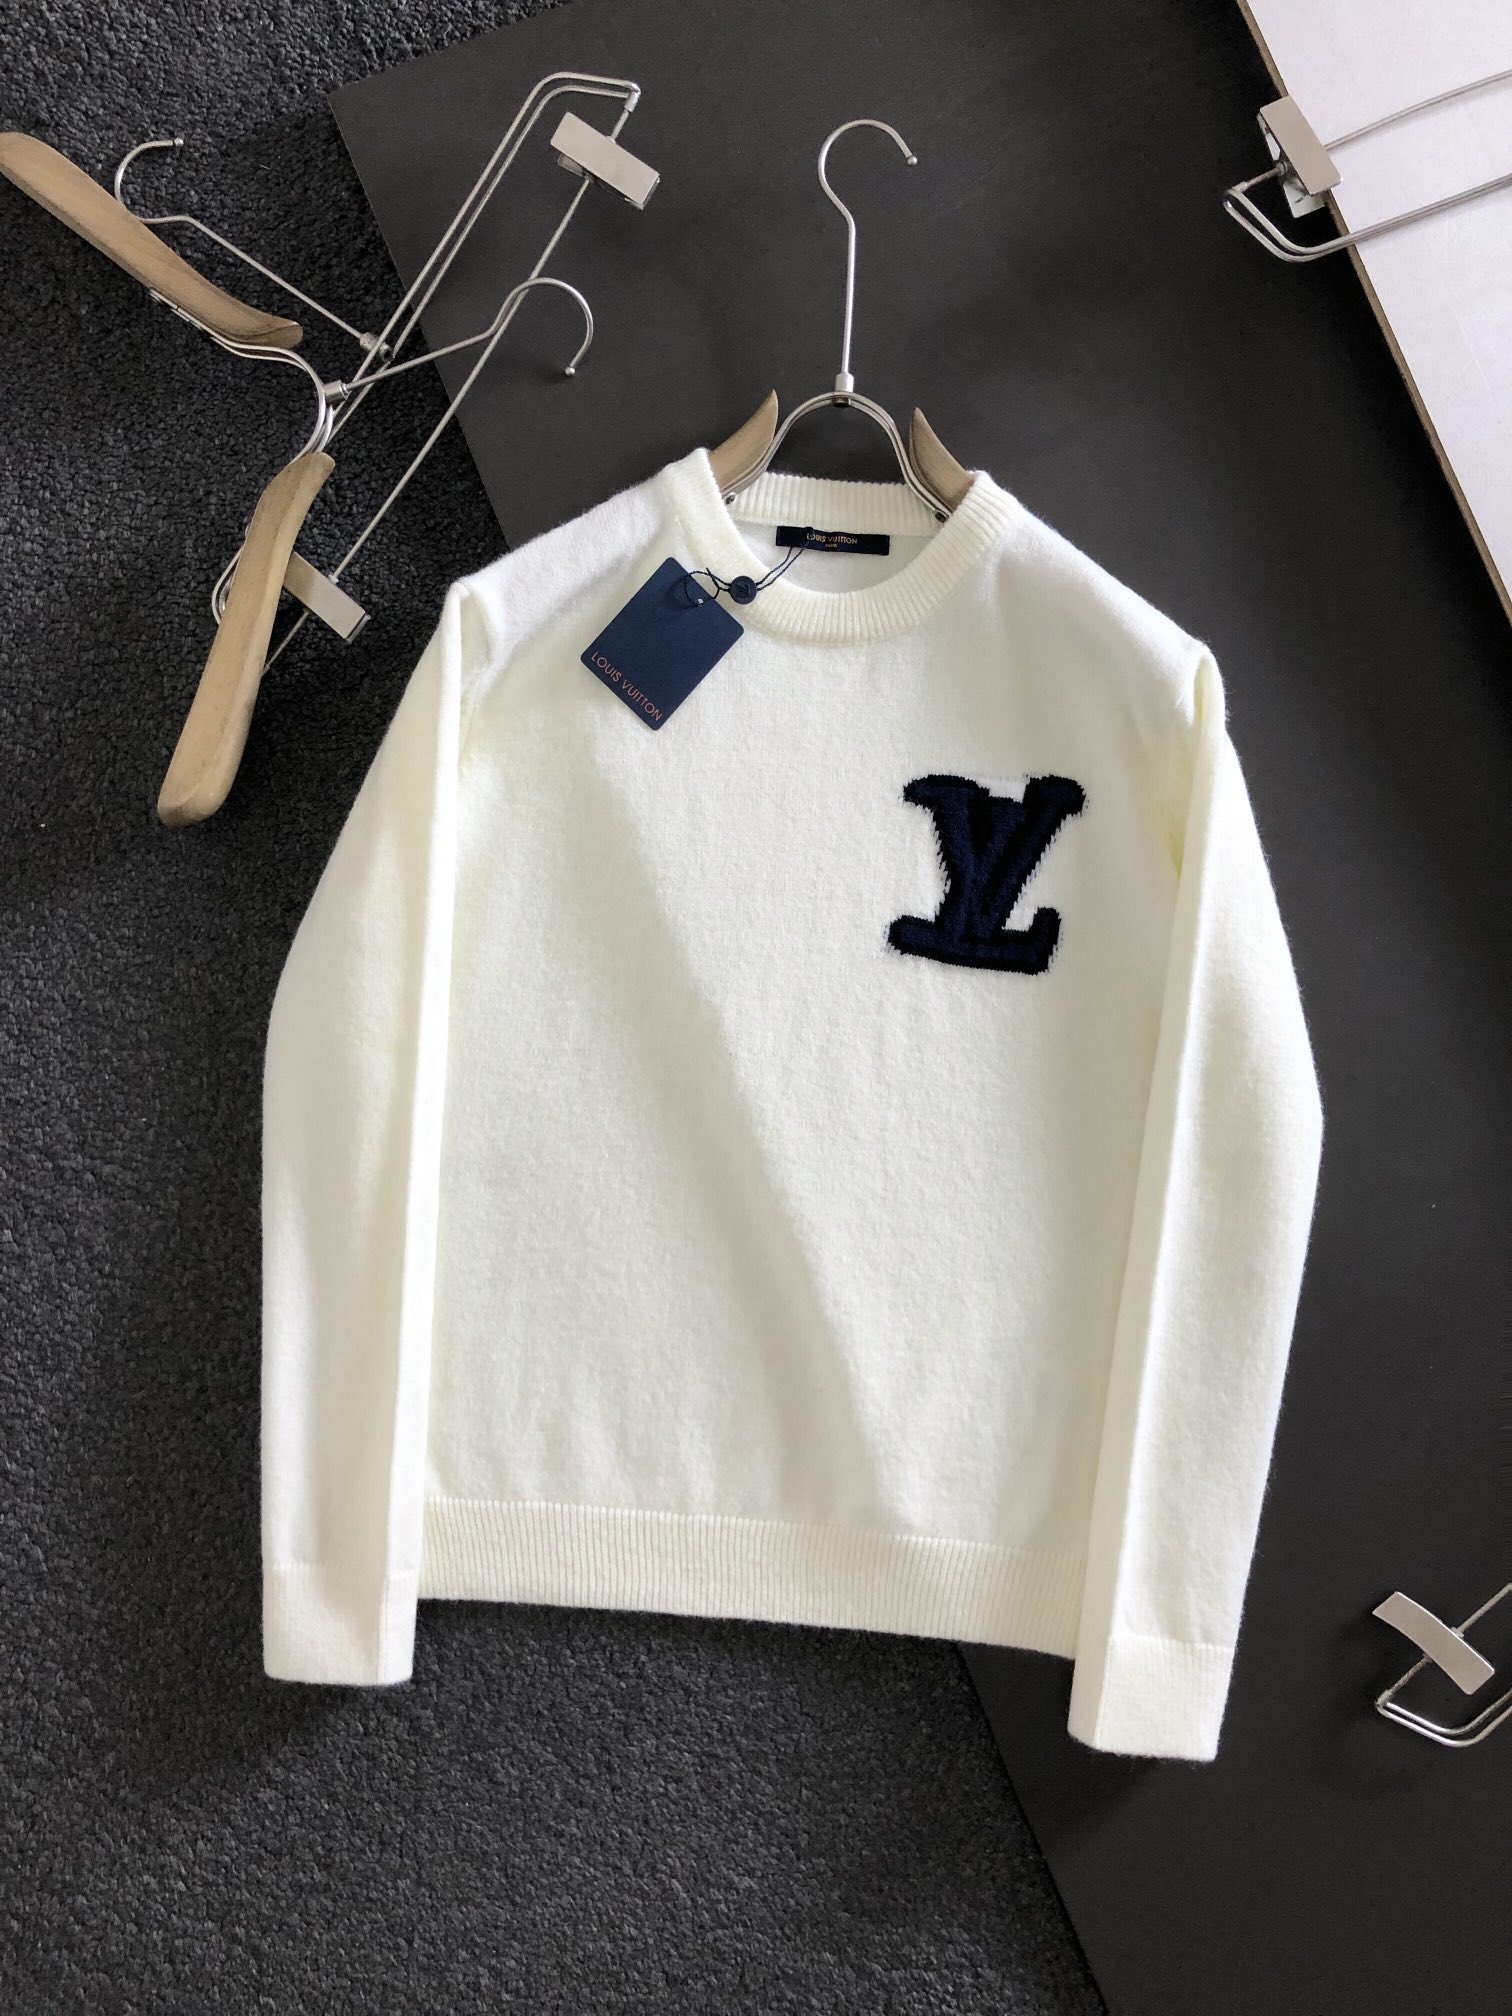 Louis Vuitton Clothing Knit Sweater Sweatshirts Cotton Knitting Wool Fall/Winter Collection Fashion